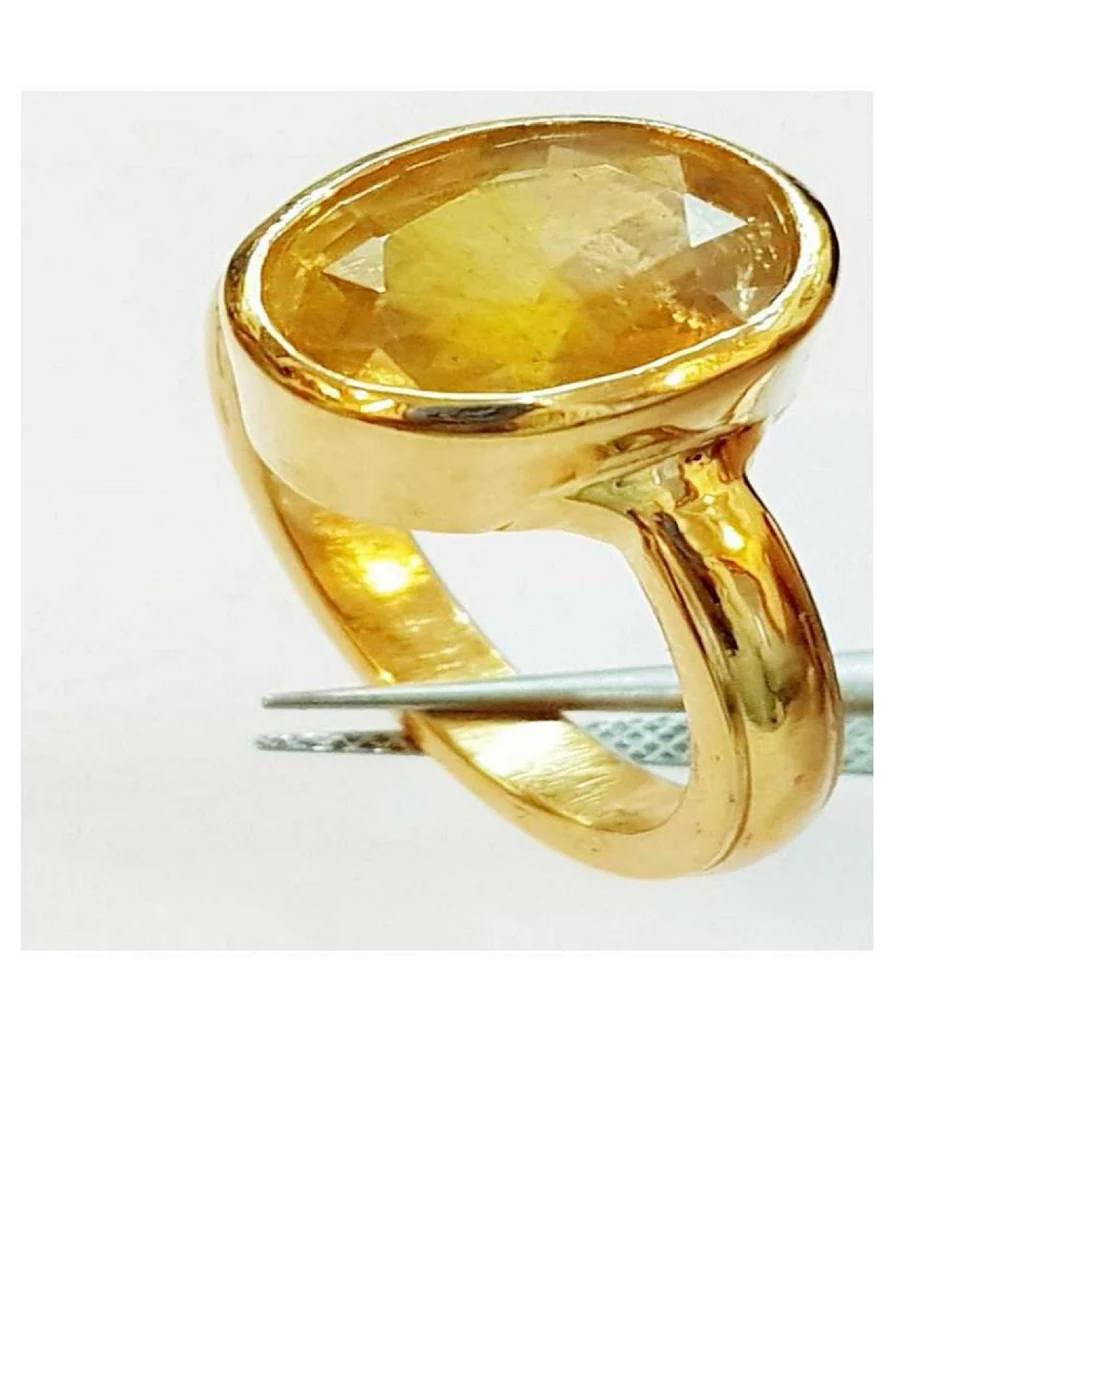 Pukhraj Stone Ring Wearing Benefits Of Pukhraj Gemstones, 55% OFF